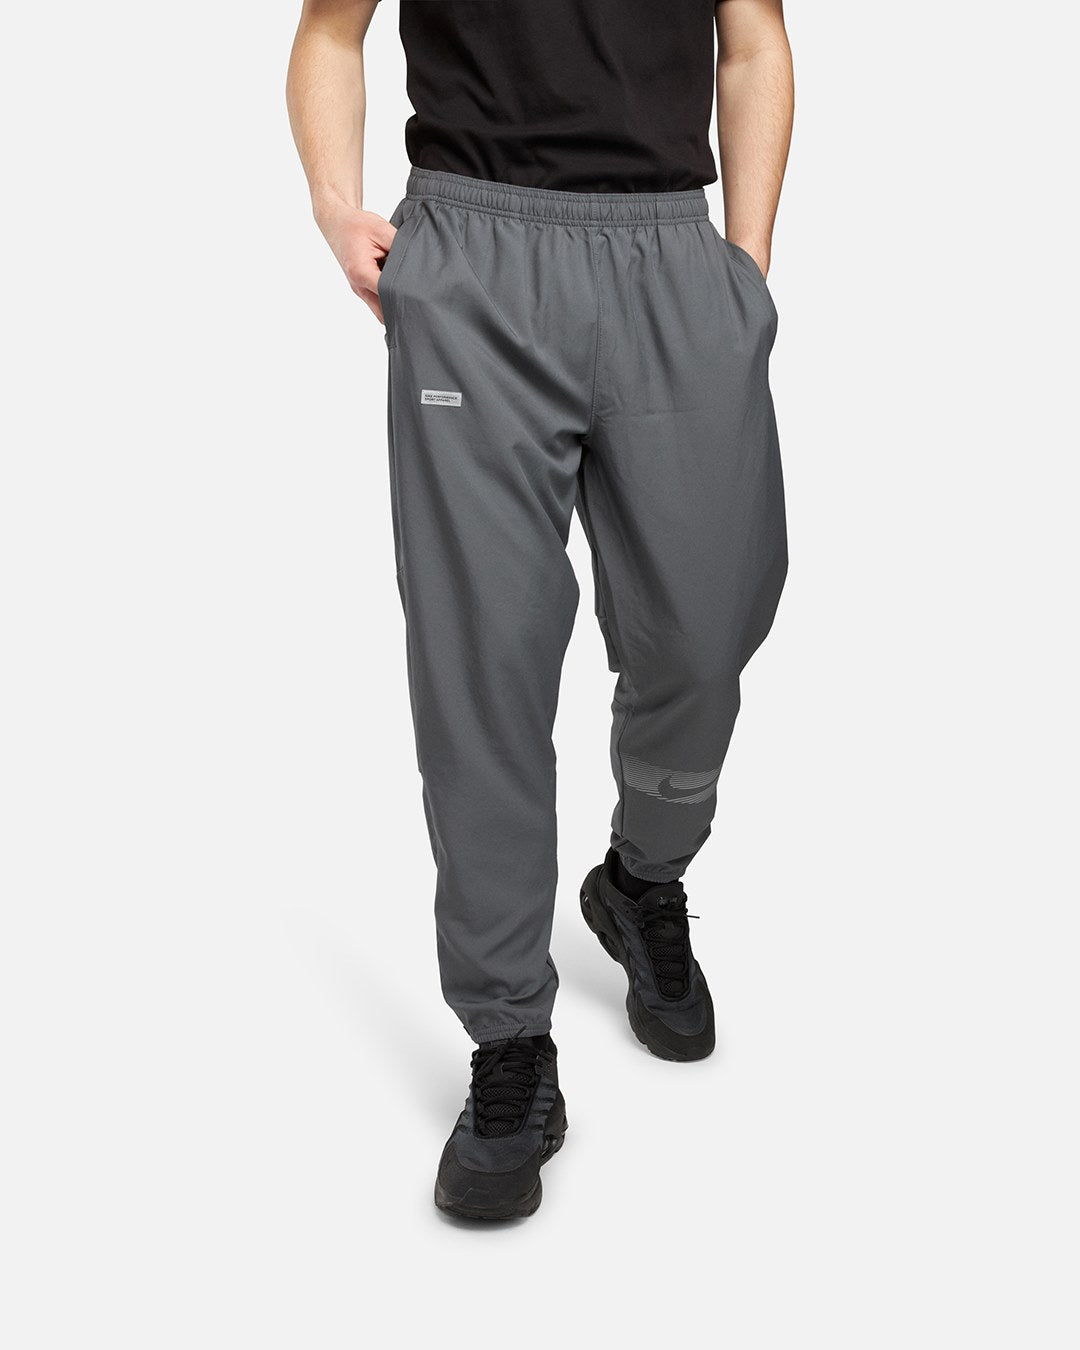 Nike Challenger Flash Pants - Dark Gray